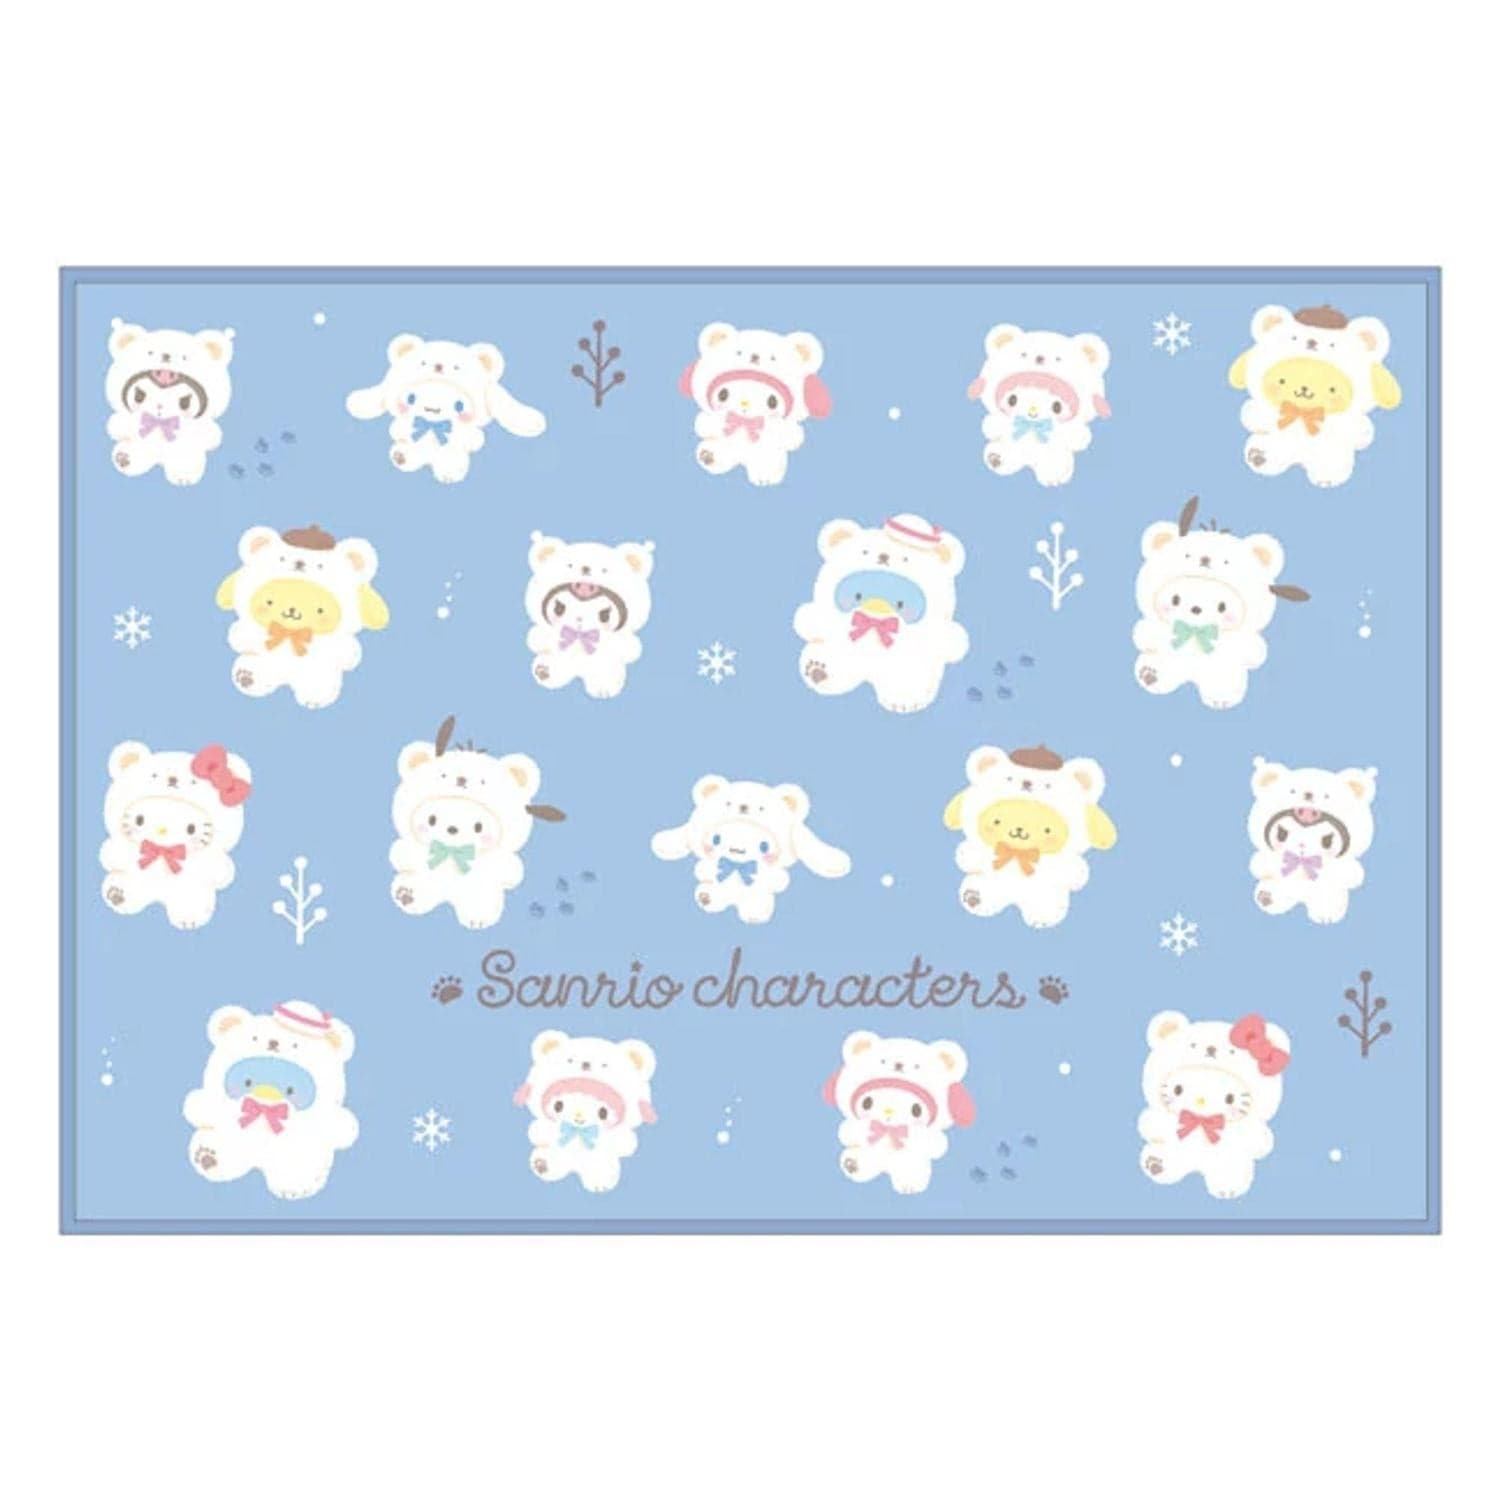 Enesco Sanrio Characters Blanket Kawaii Gifts 4550337656525